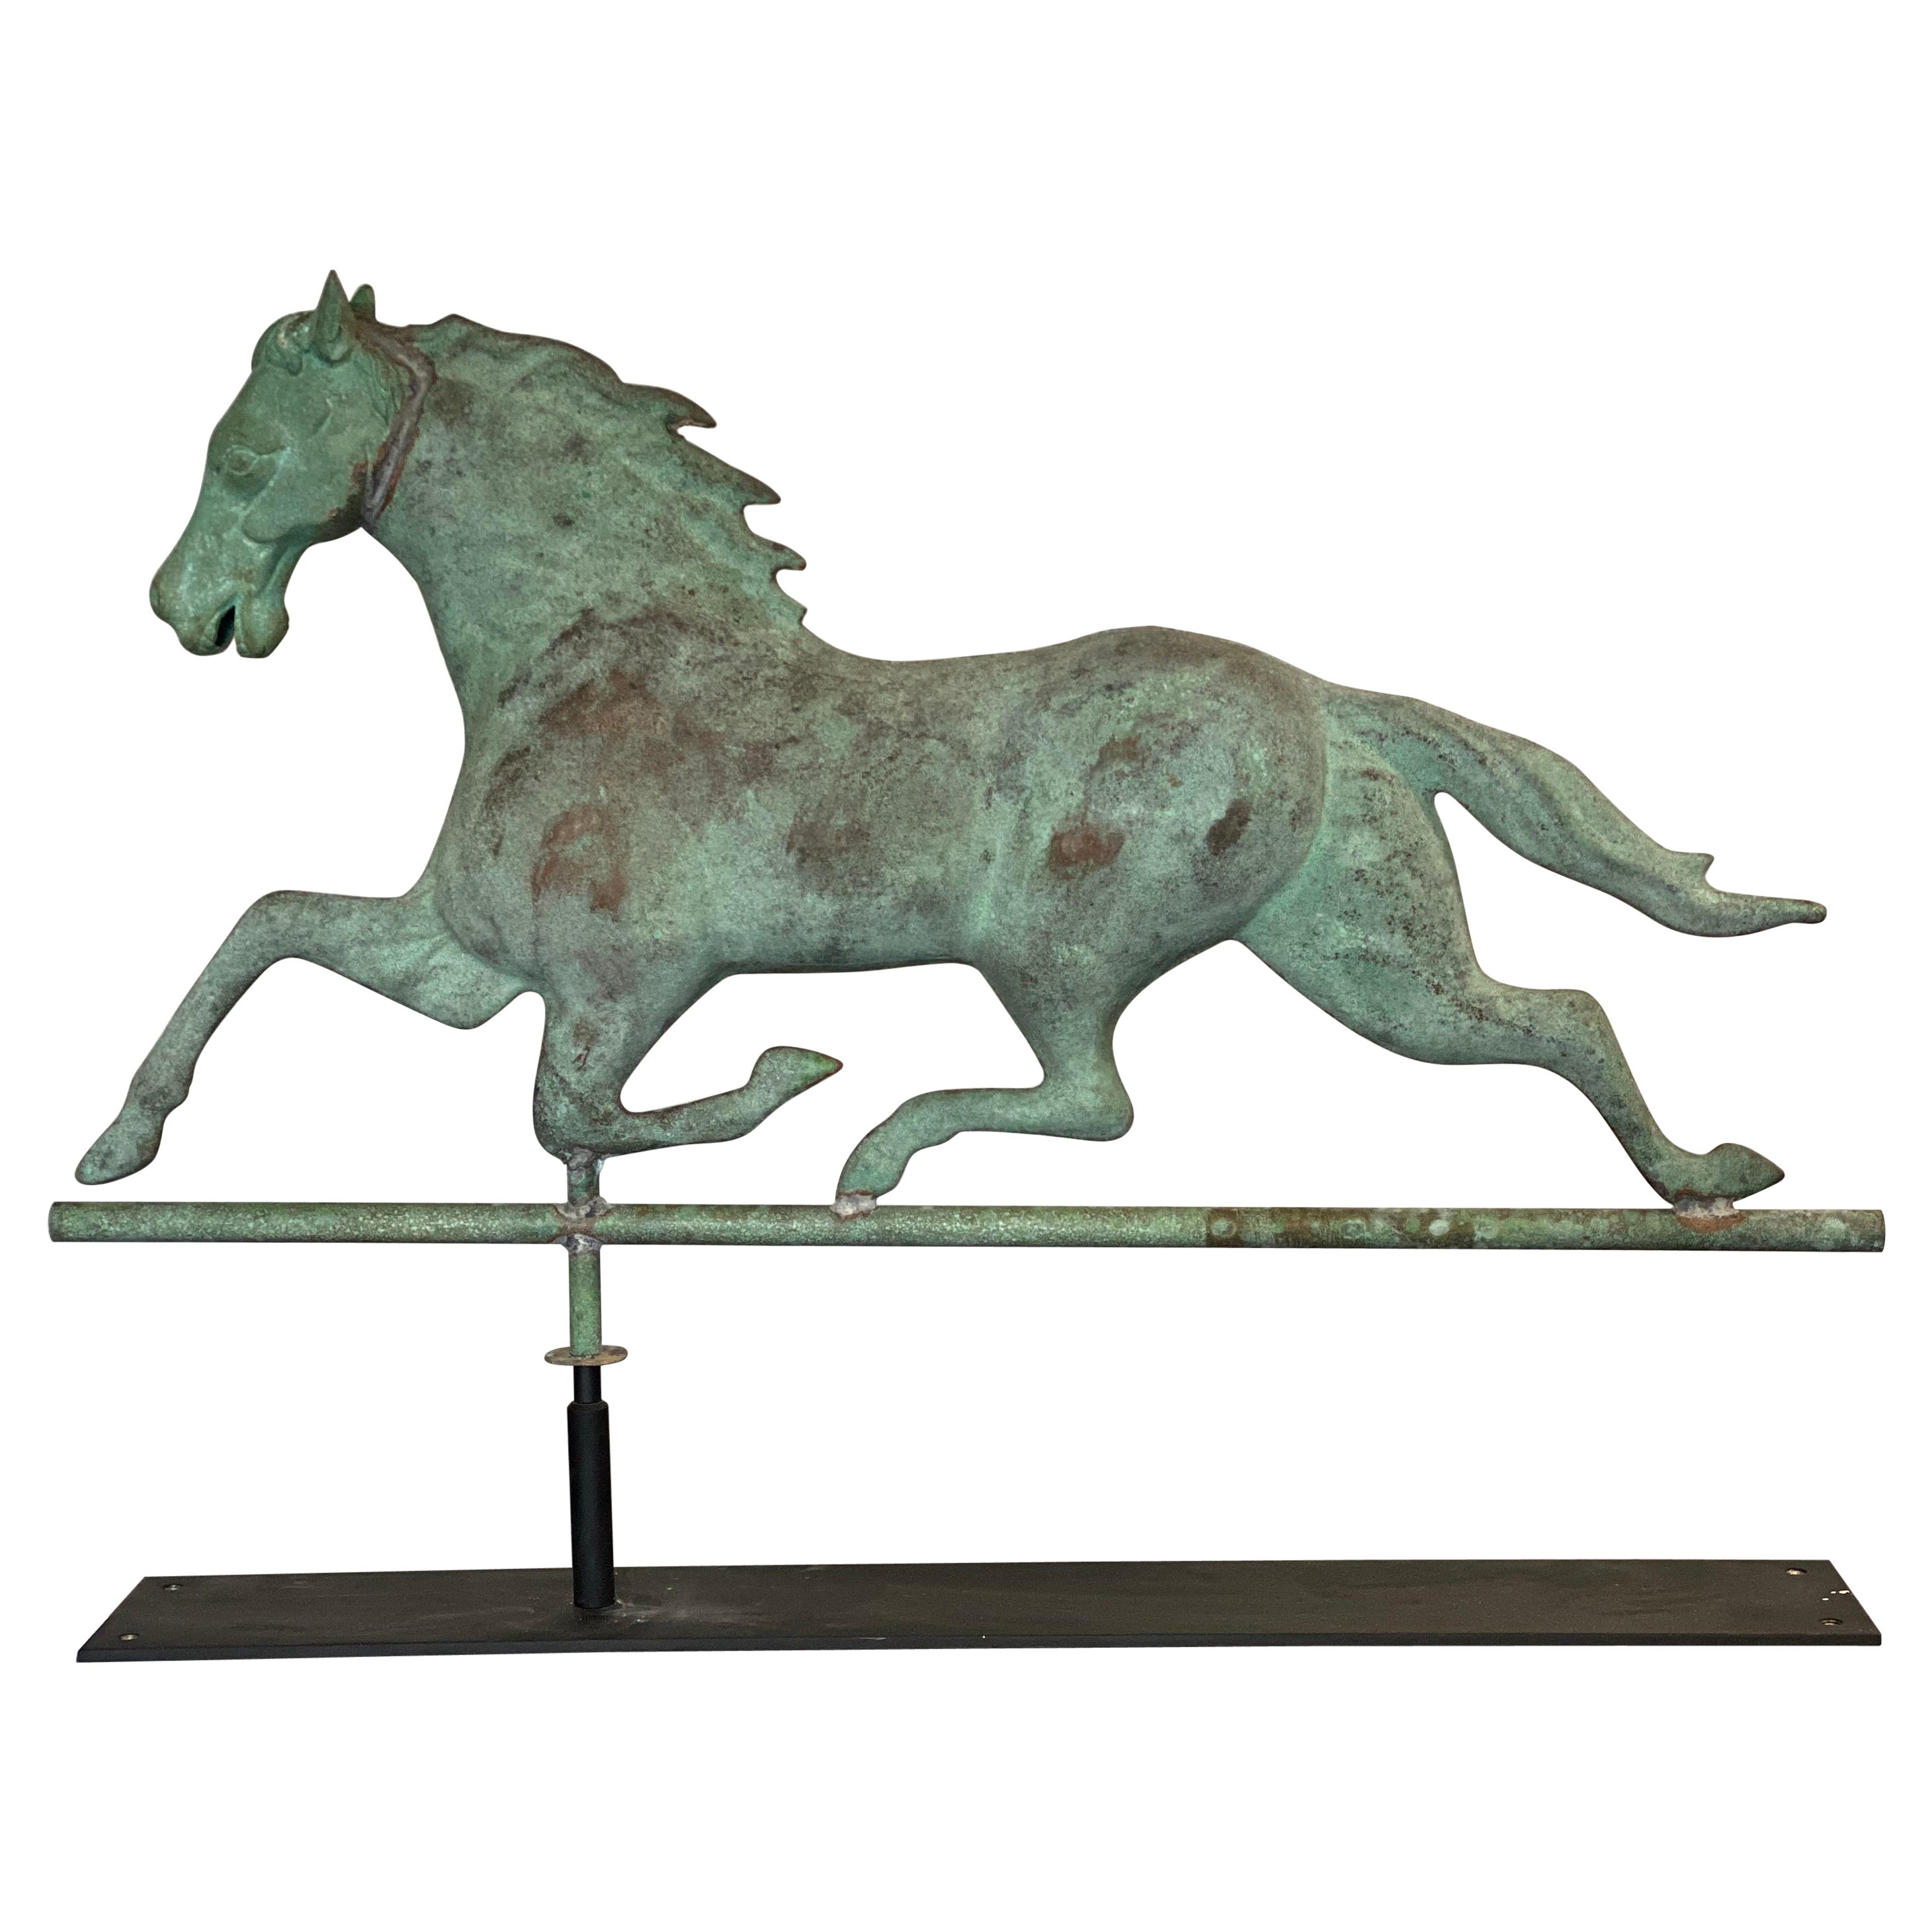 Girouette à cheval vert sur pied, attribuée à Cushing Ethan Allen